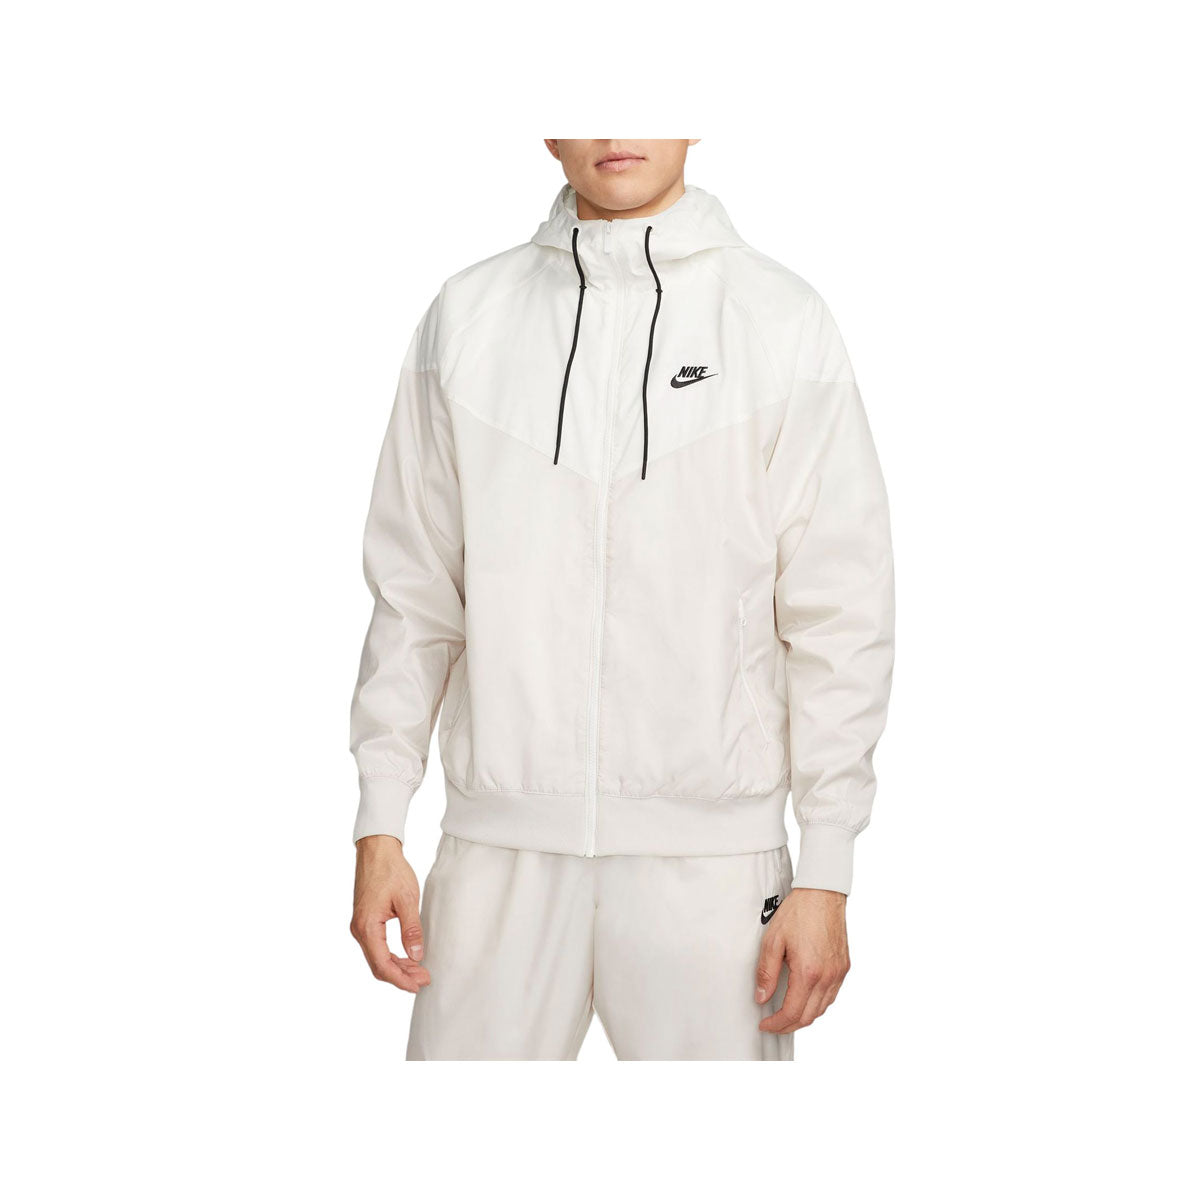 Nike Men's Sportswear Windrunner Full Zip Hooded Jacket